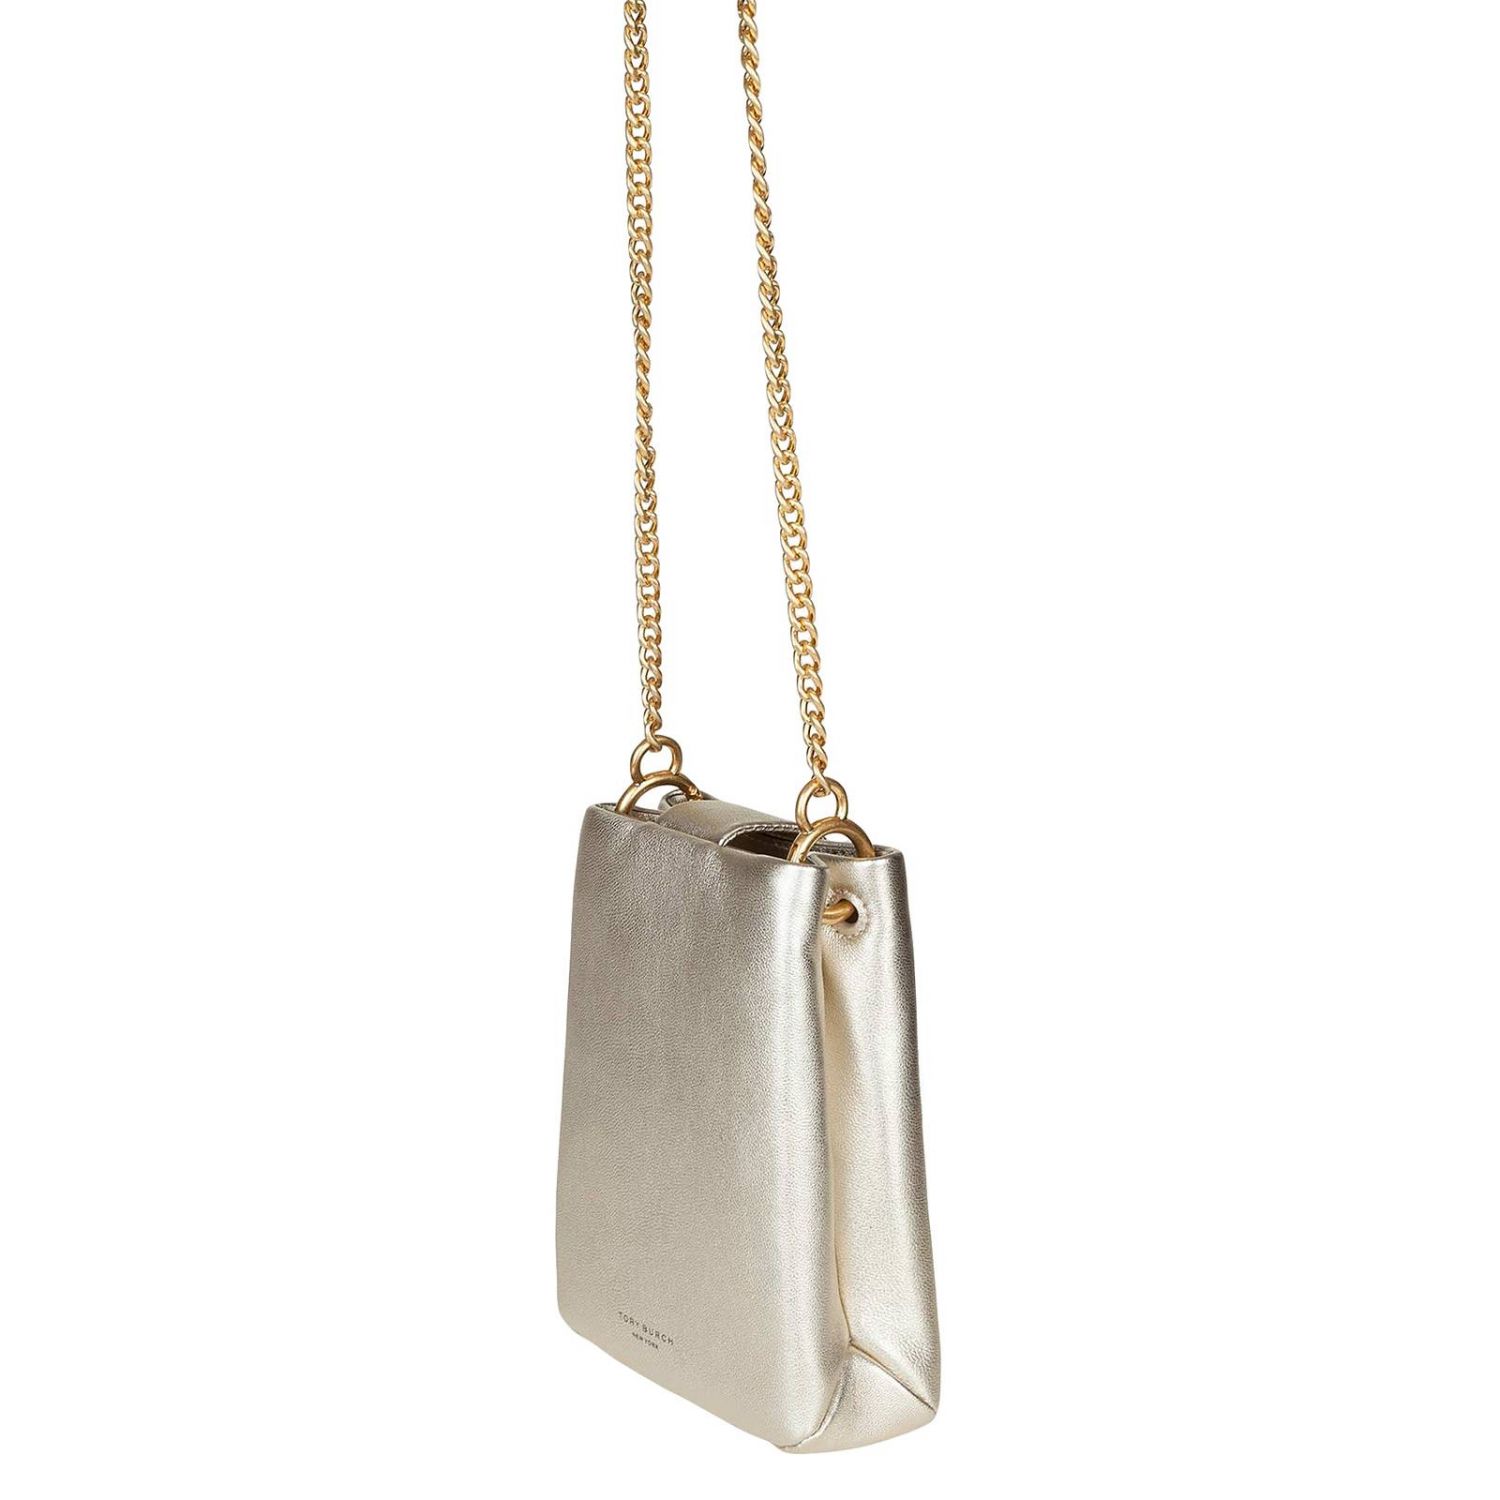 Tory Burch Outlet: handbag for woman - White | Tory Burch handbag 54689 ...